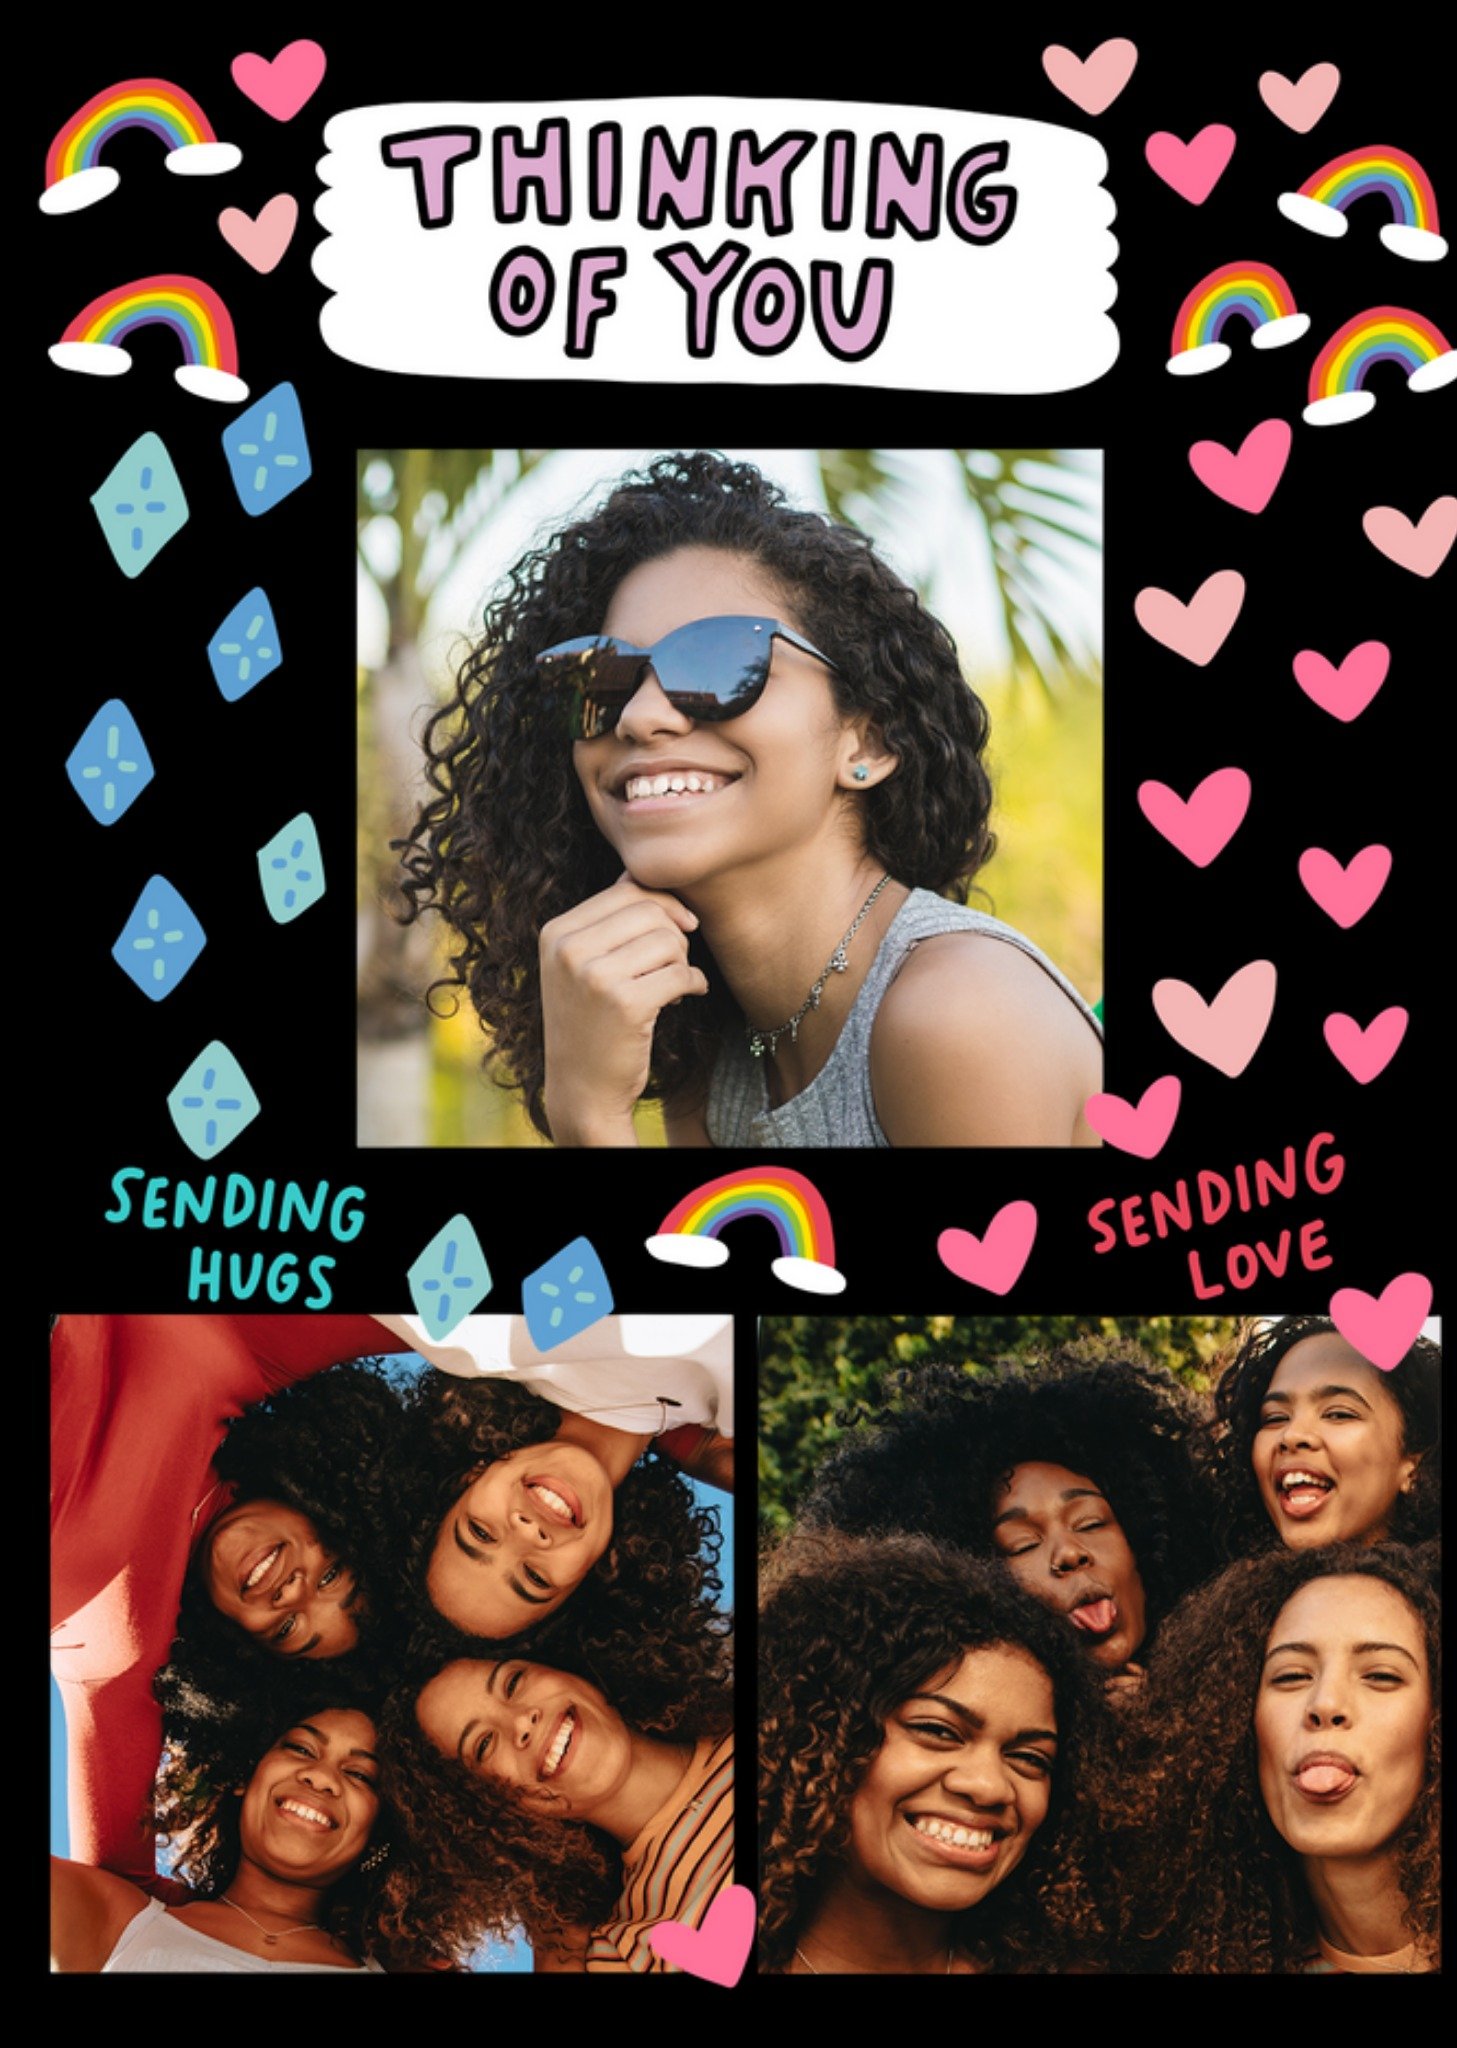 Moonpig Sending Hugs And Love Thinking Of You Photo Upload Card, Large